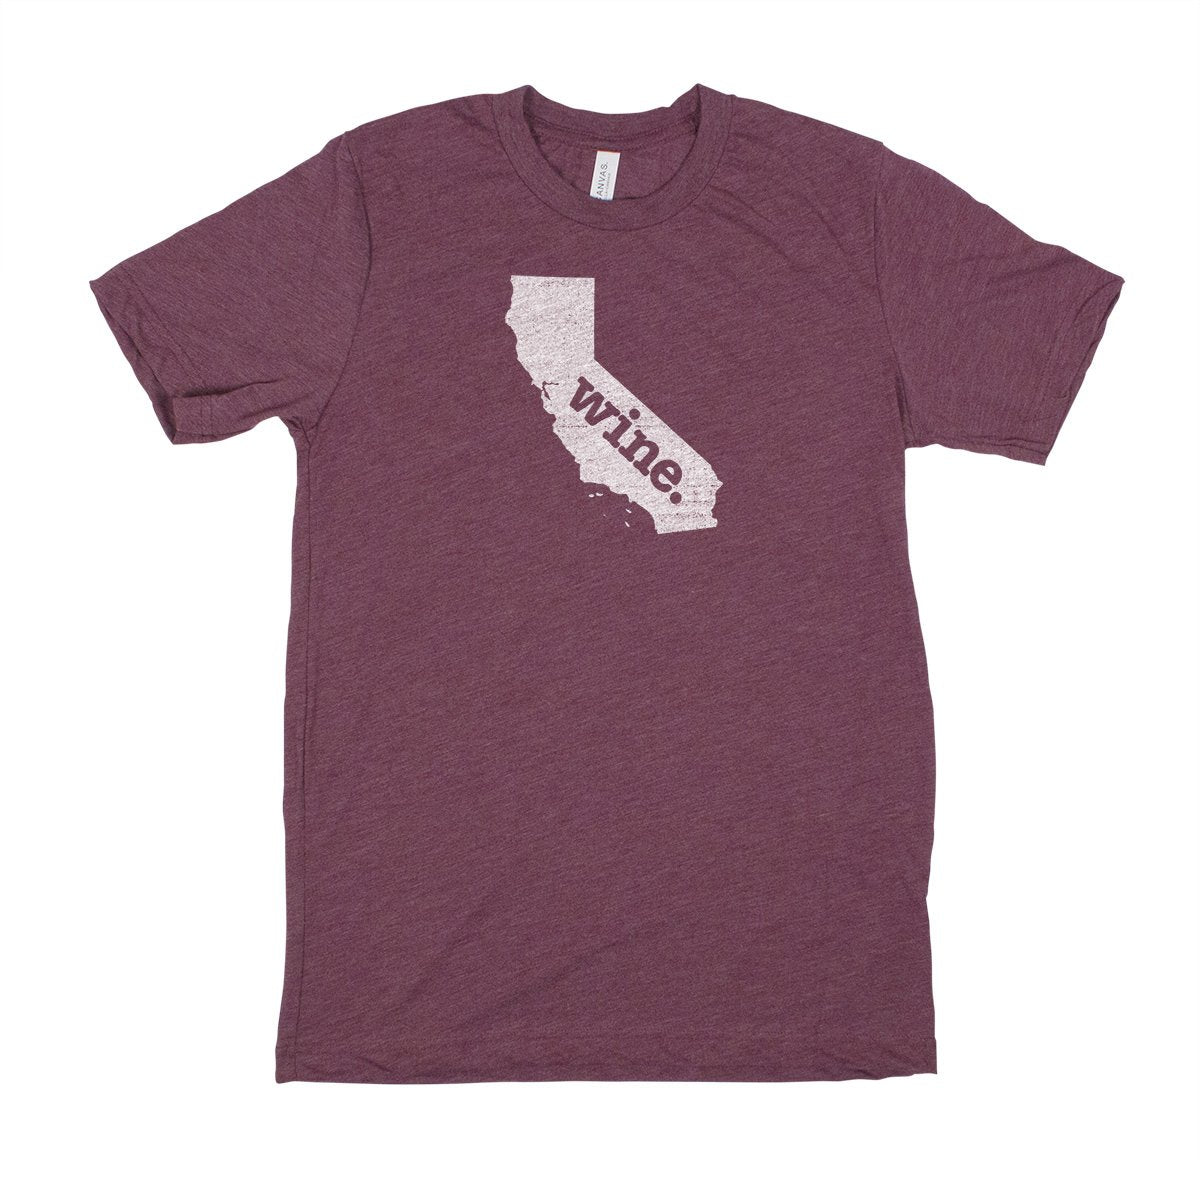 run. Men's Unisex T-Shirt - Arkansas